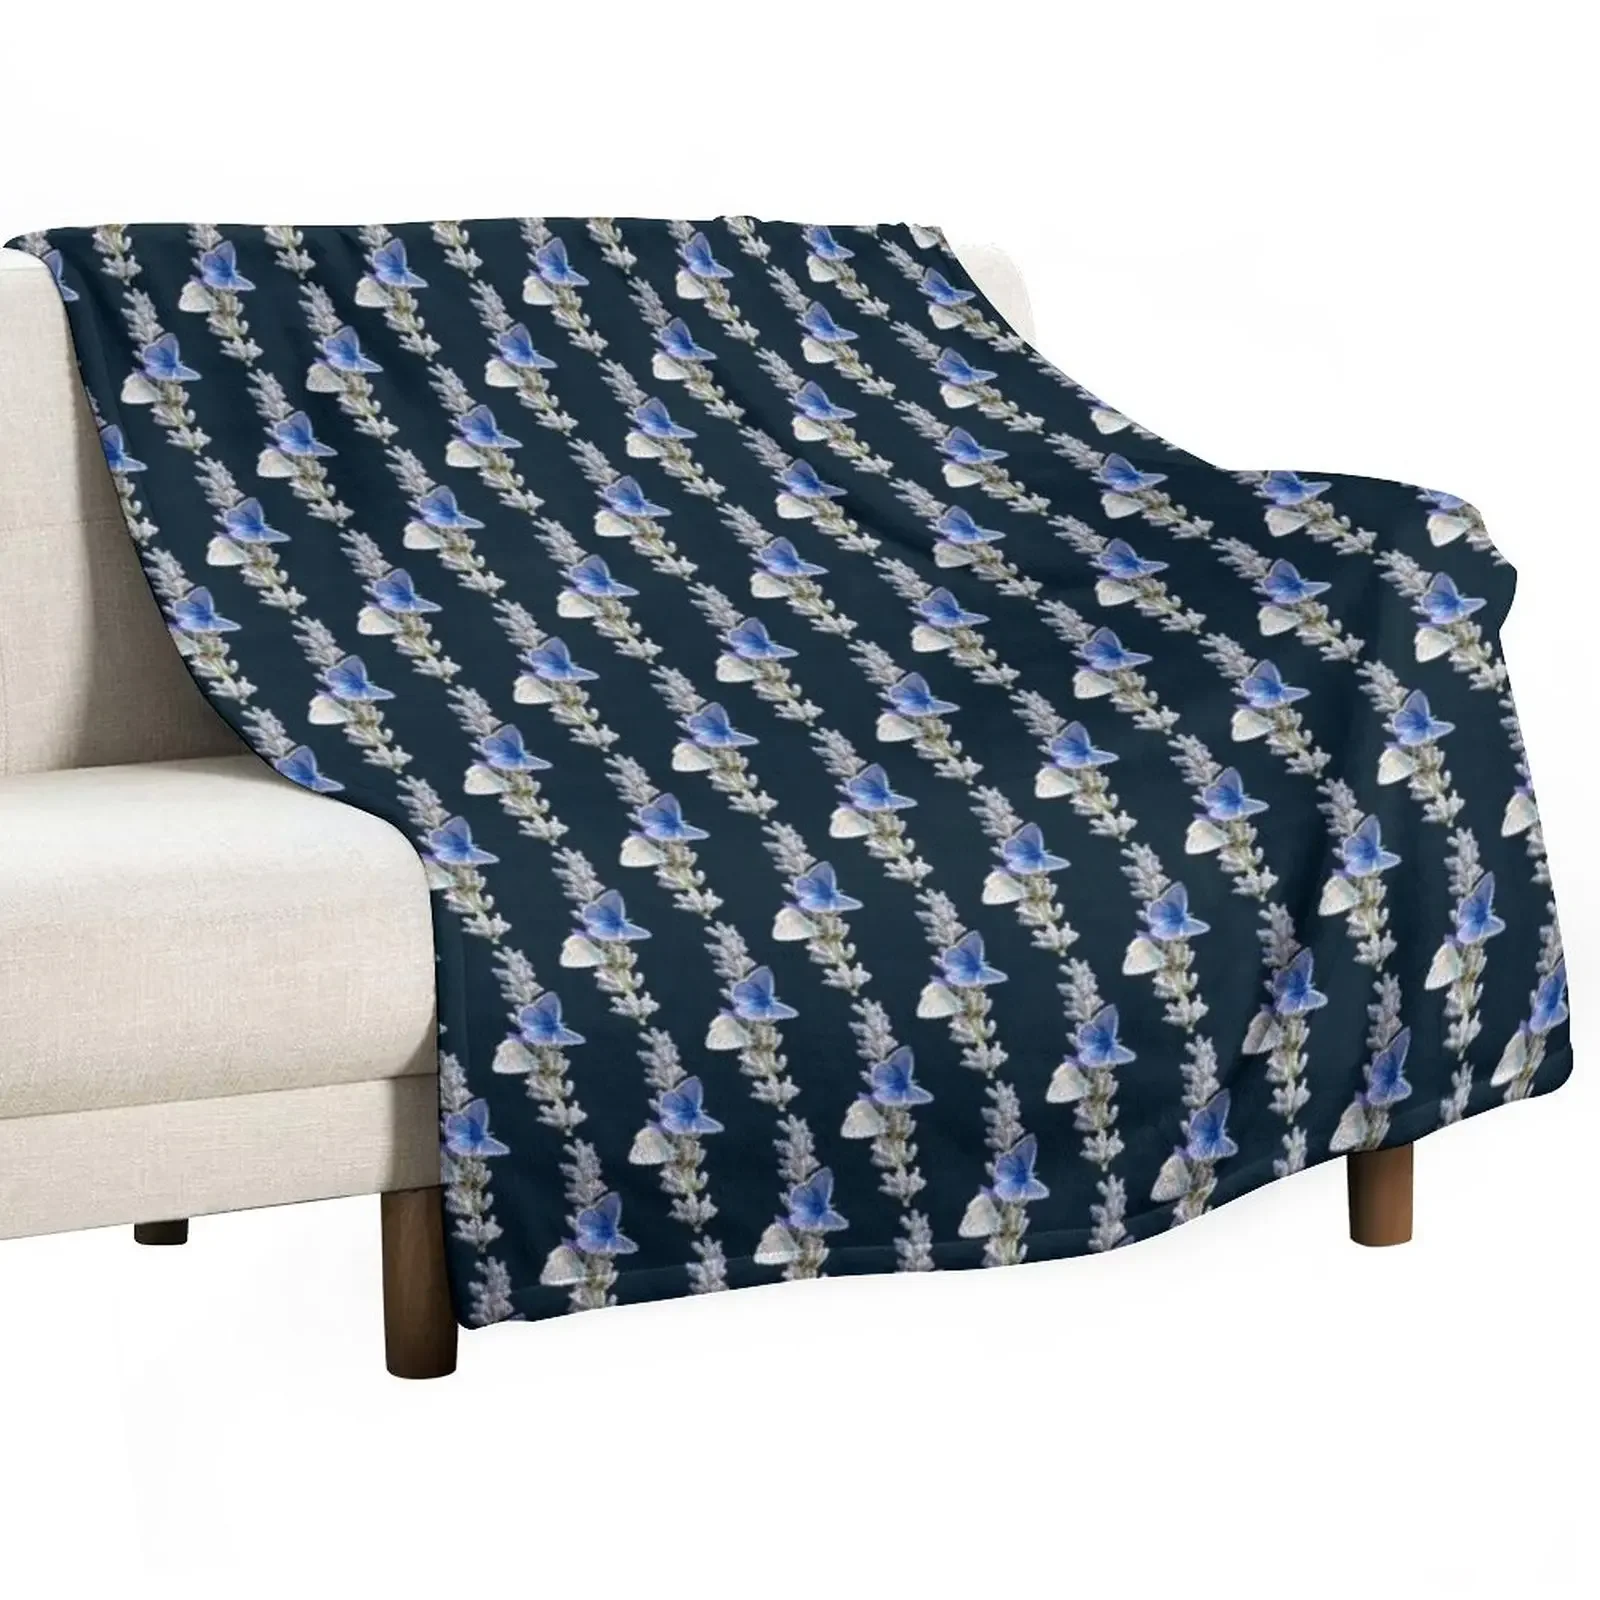 

Gift idea blue butterflies on lavender Throw Blanket Softest Soft Blankets